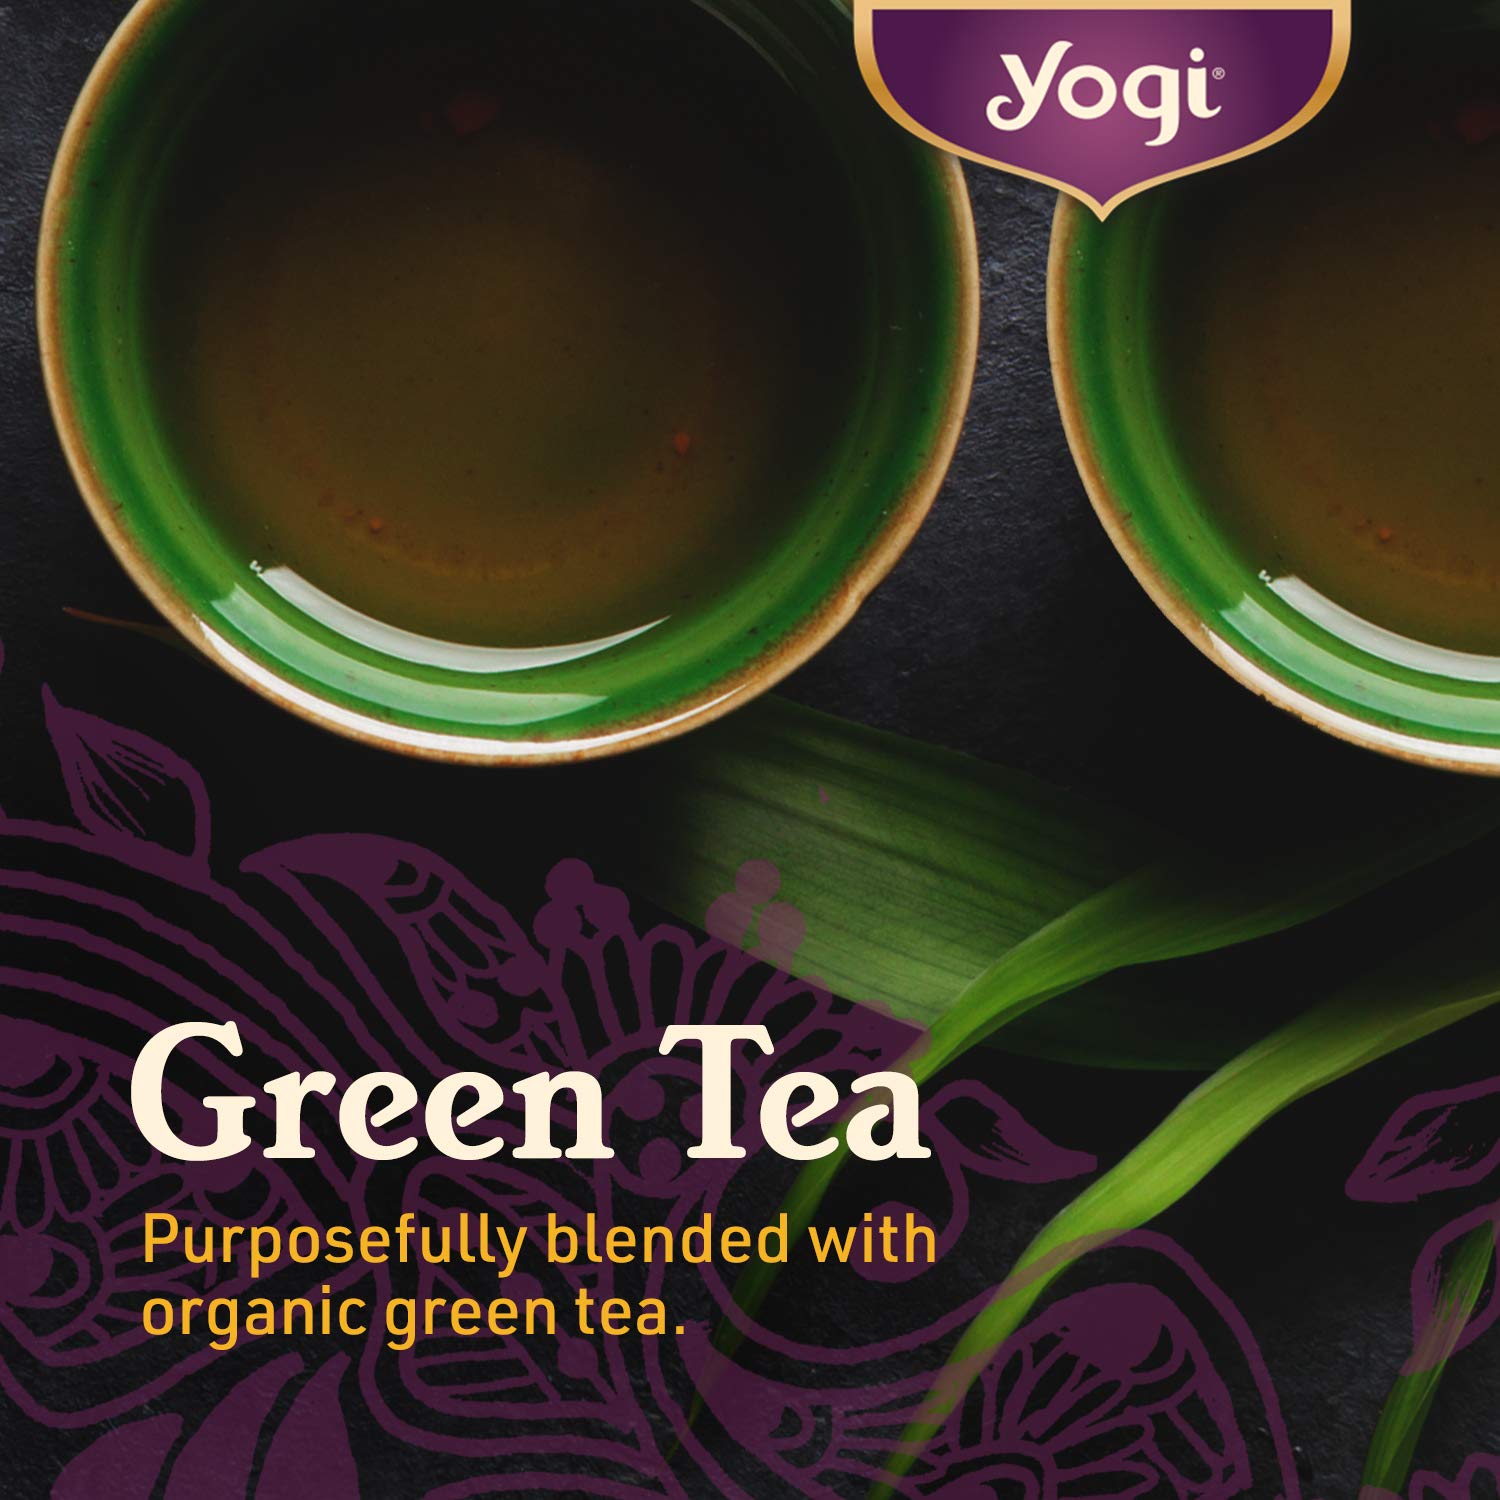 Yogi Tea Green Tea Pure Green Decaf Tea - 16 Tea Bags per Pack (4 Packs) - Organic Decaffeinated Green Tea - Supports Overall Health - Made from Organic Decaffeinated Green Tea Leaf